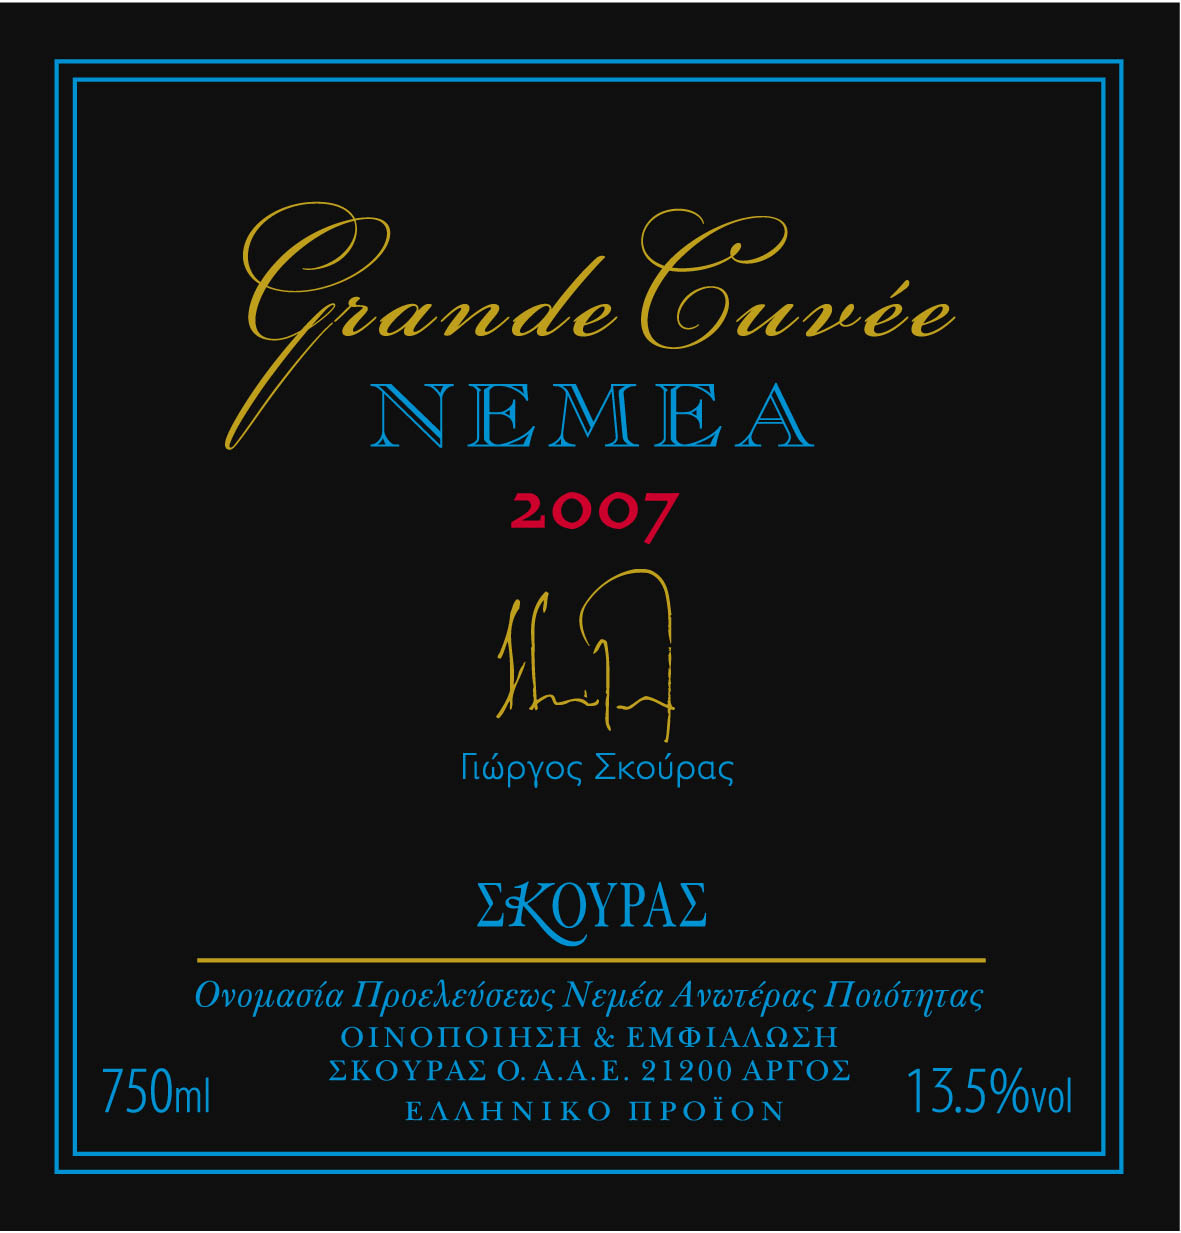 2014 Skouras Grande Cuvee Nemea Greece - click image for full description